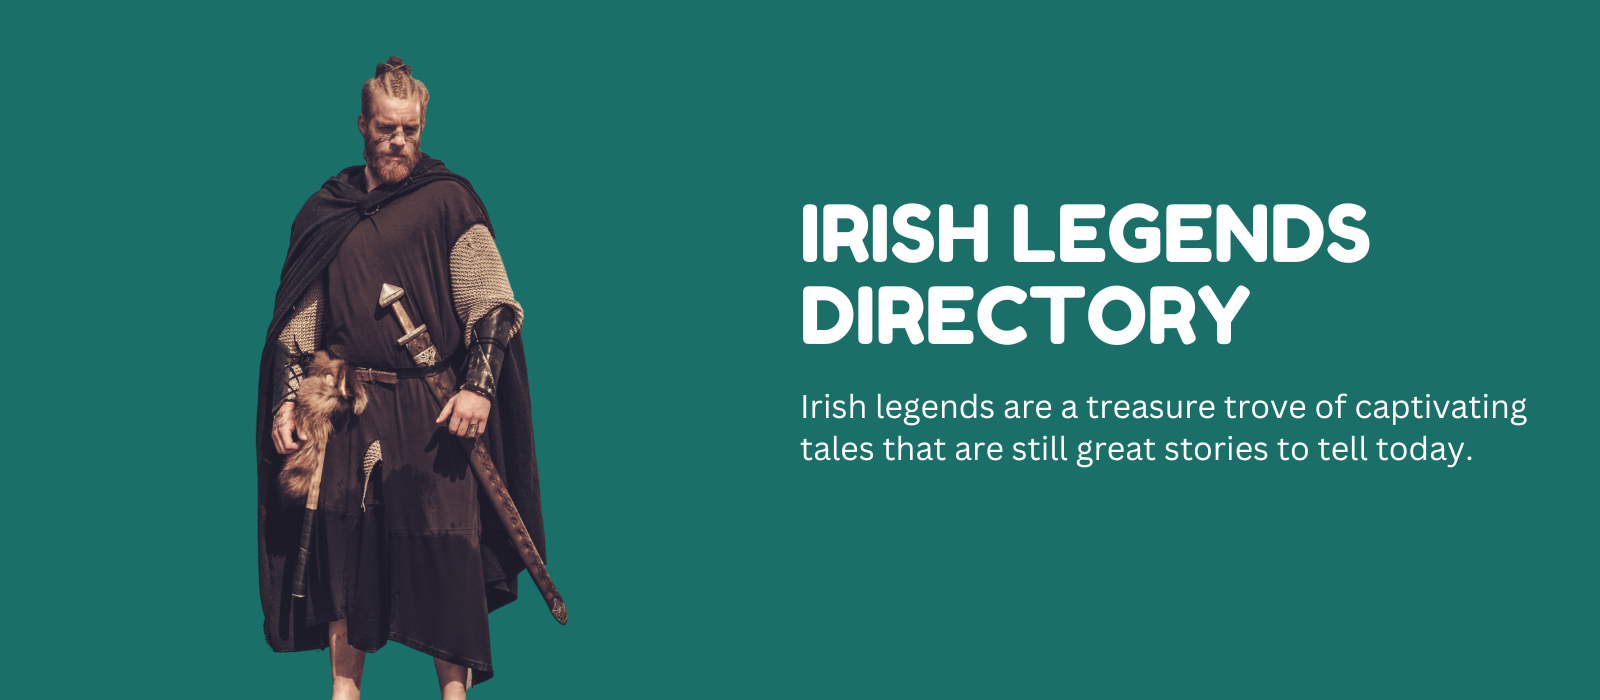 JOHNNY MAGORY - IRISH LEGENDS DIRECTORY